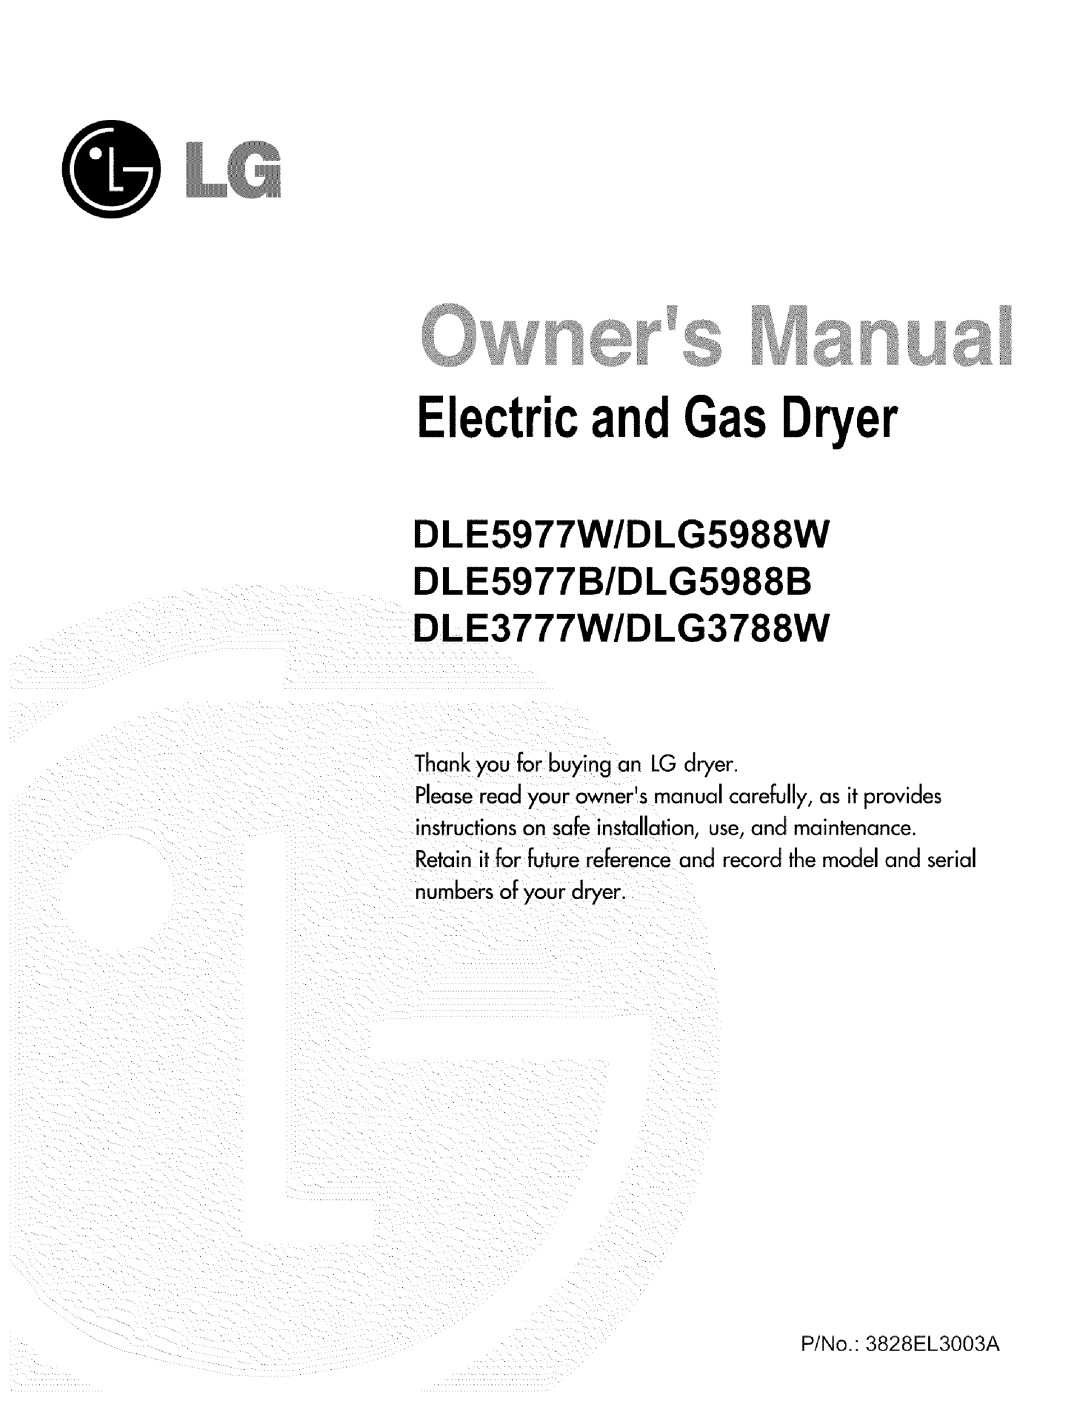 LG Electronics D 5988W owner manual ElectricandGasDryer, DLE 5977W/D LG 5988W DLE 5977 B/D LG 5988 B DLE3777W/DLG3788W 